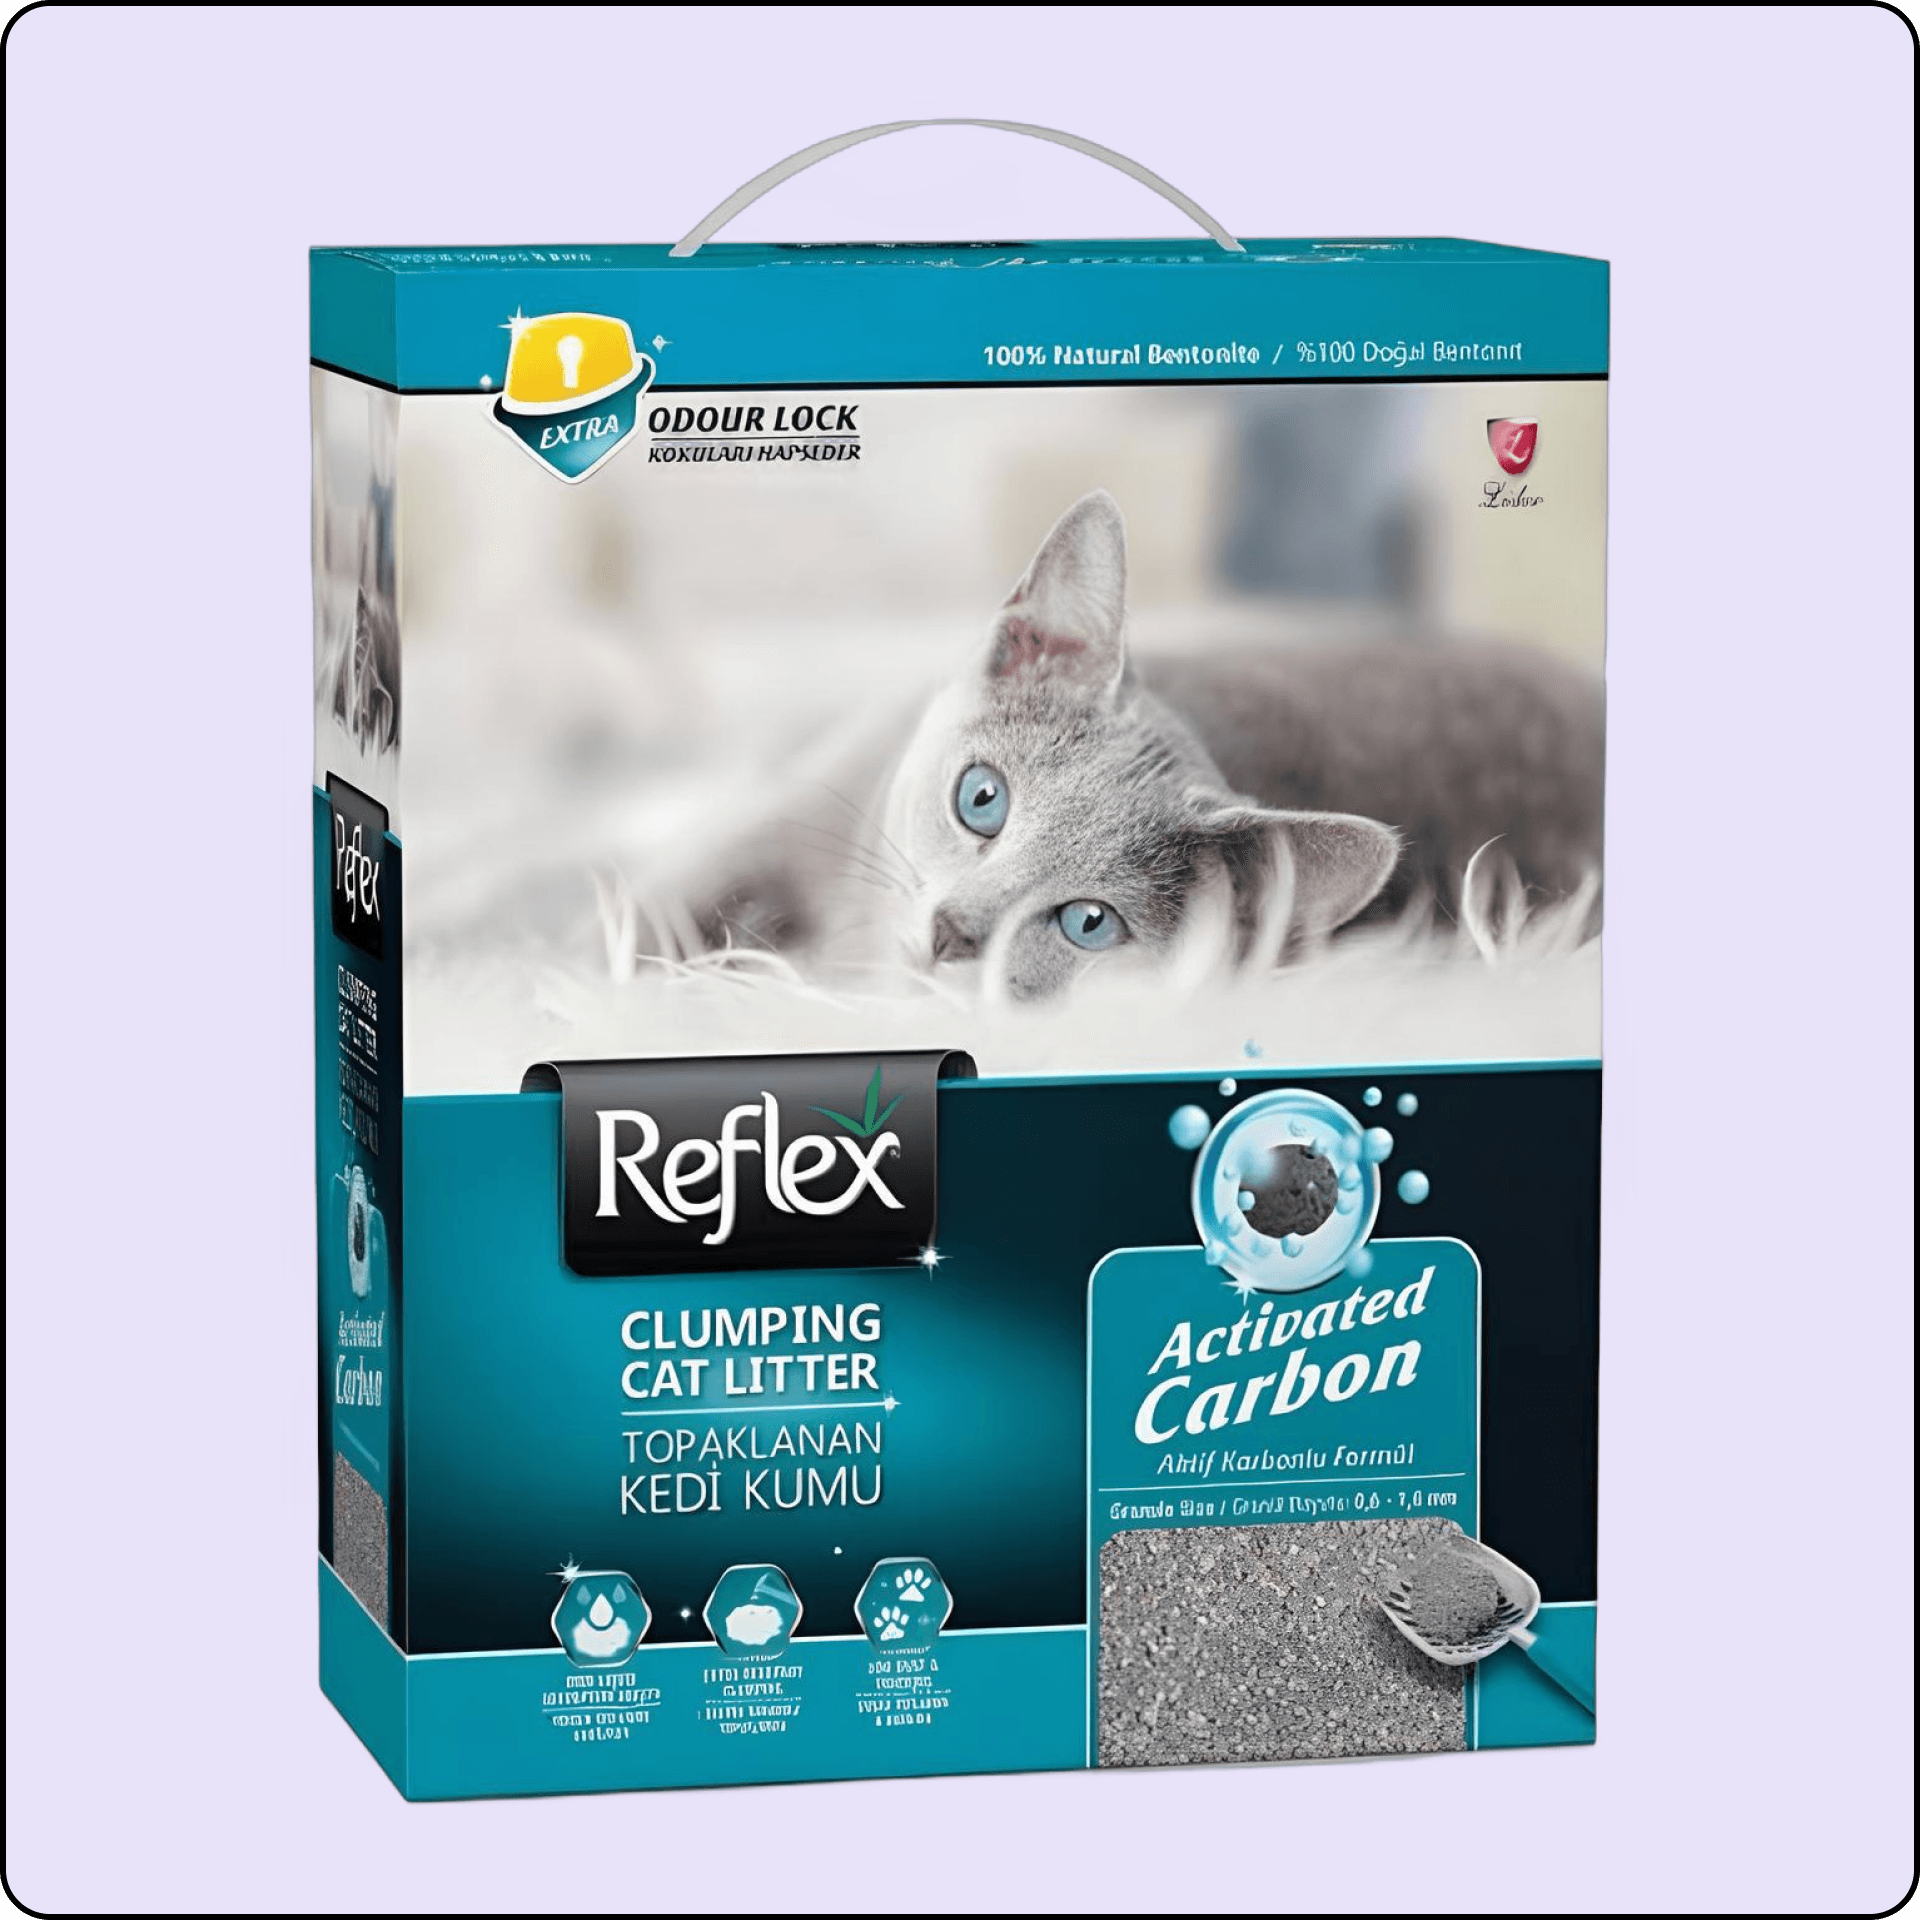 Reflex Aktif Karbonlu Süper Hızlı Topaklanan Kedi Kumu 10 lt